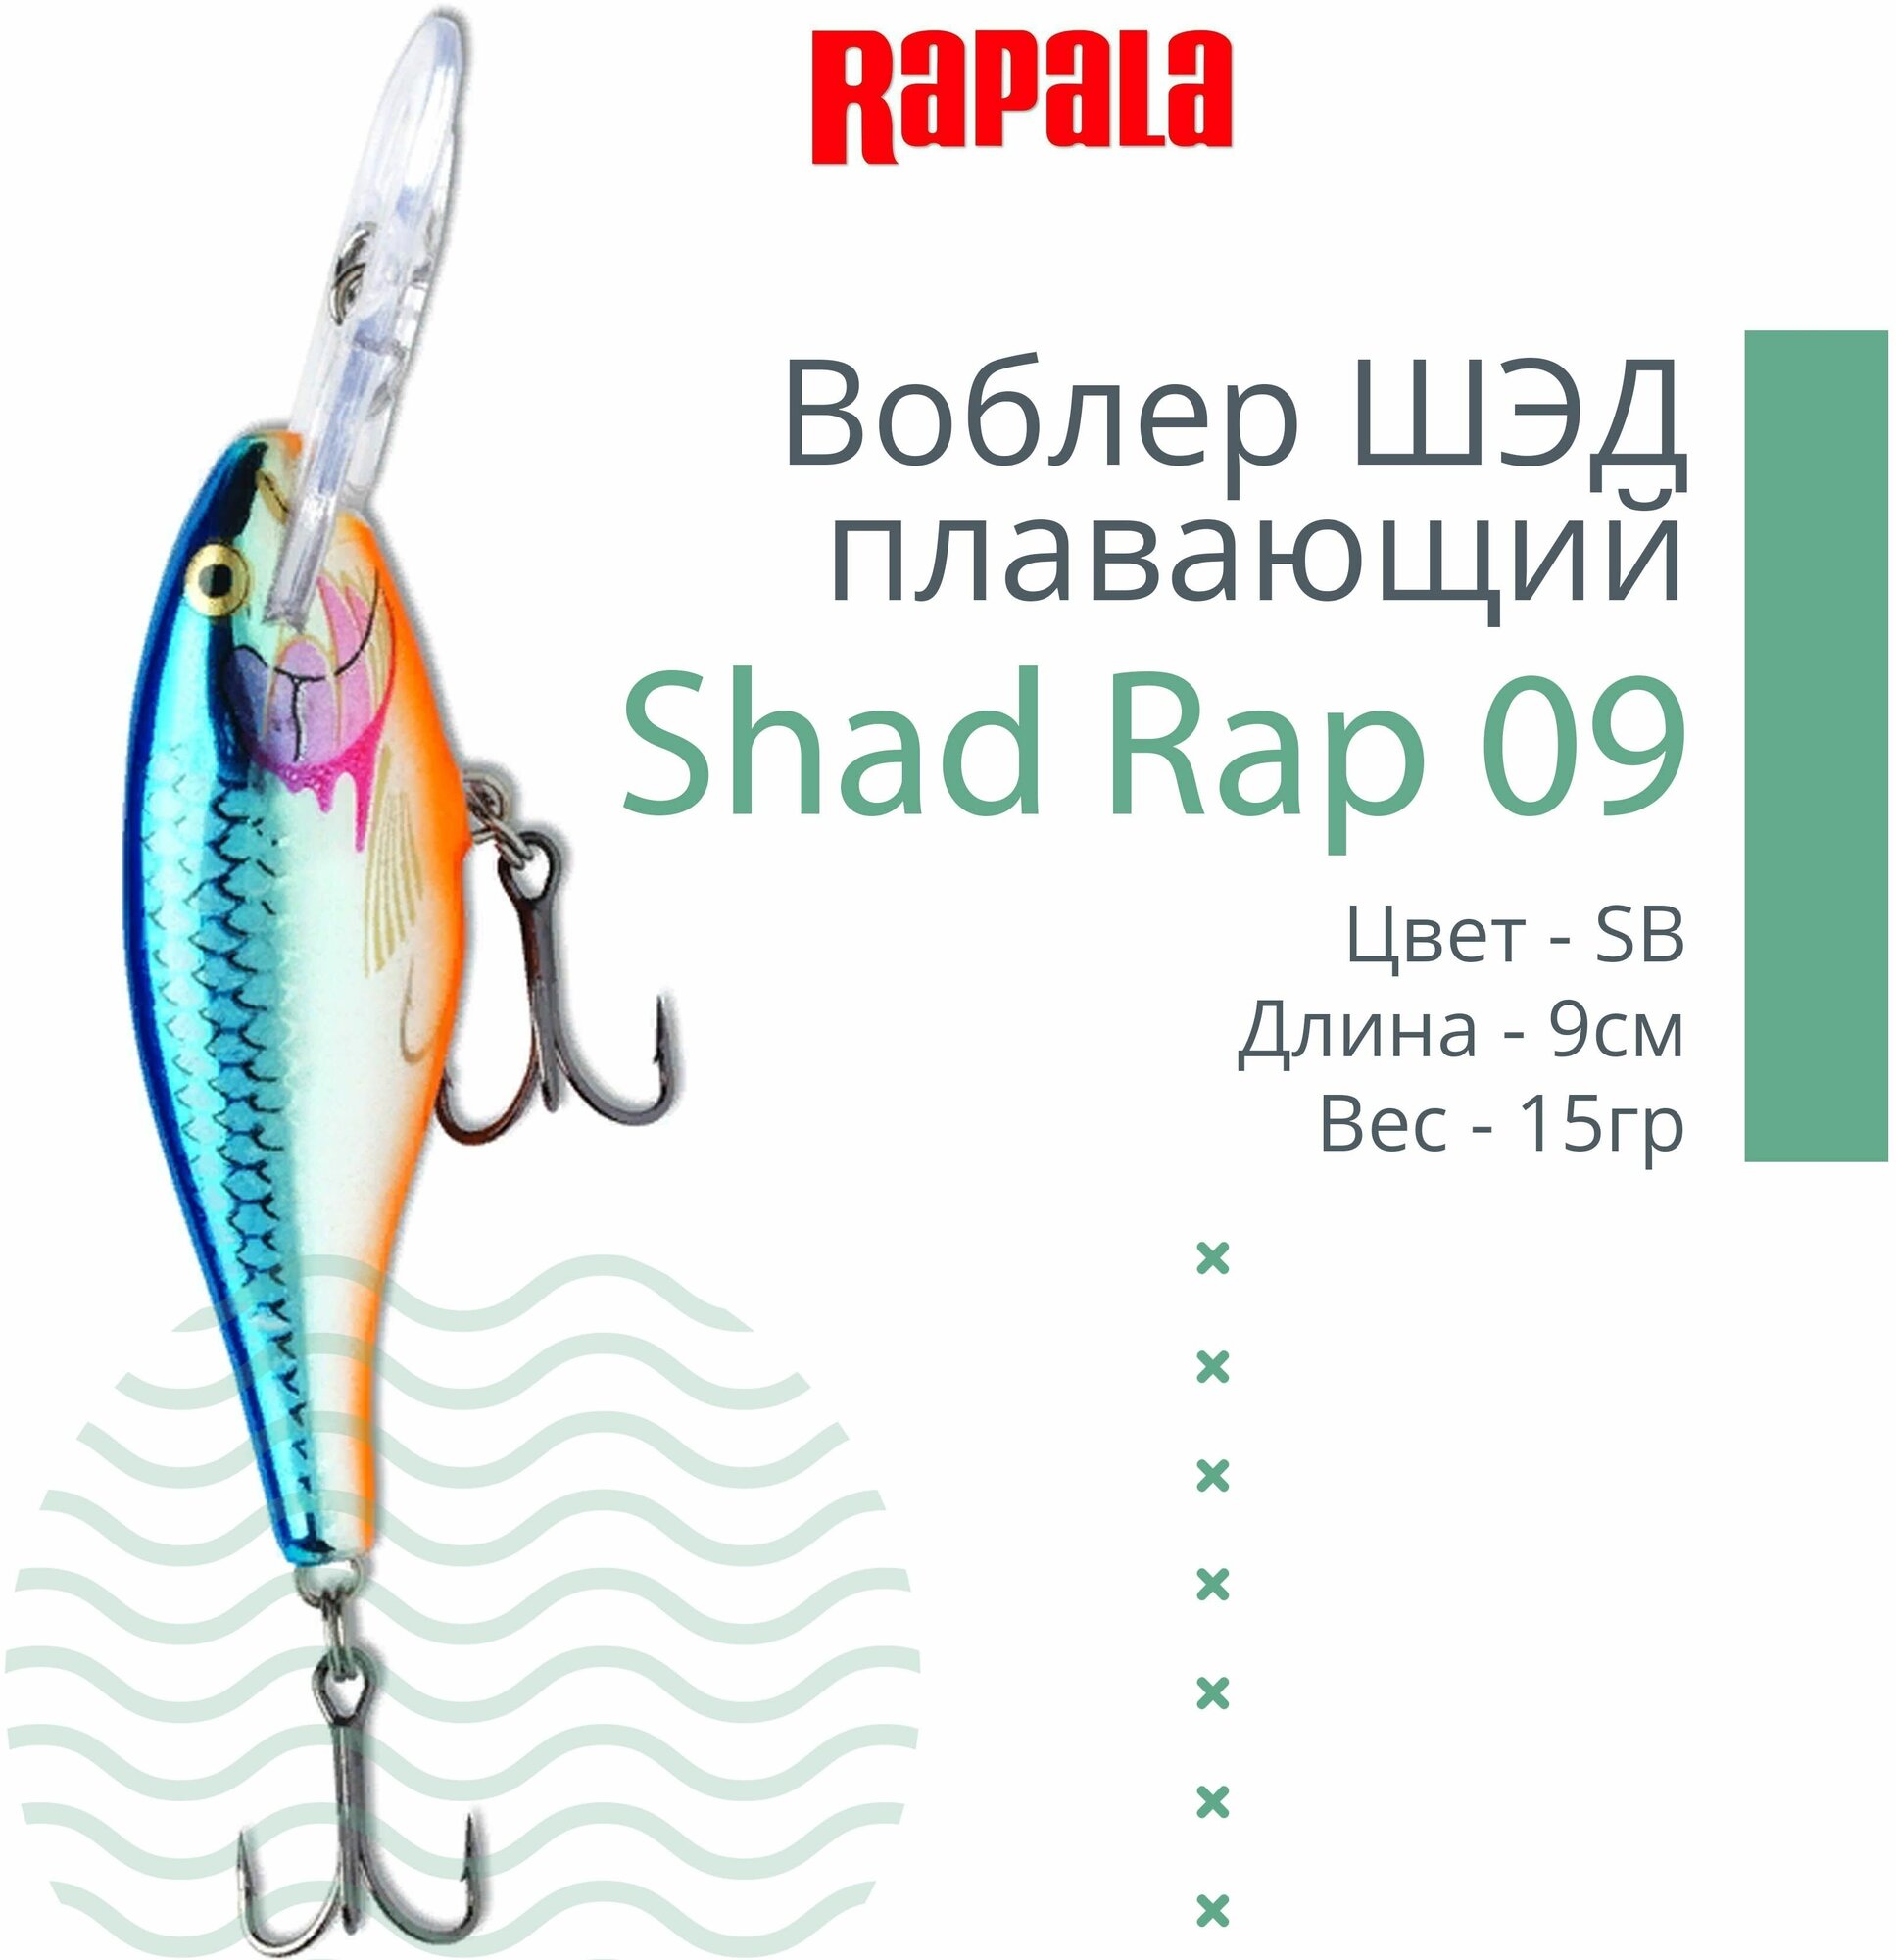 Воблер Rapala Shad Rap плавающий 2,4-4,5м, 9см 15гр SR09-SB